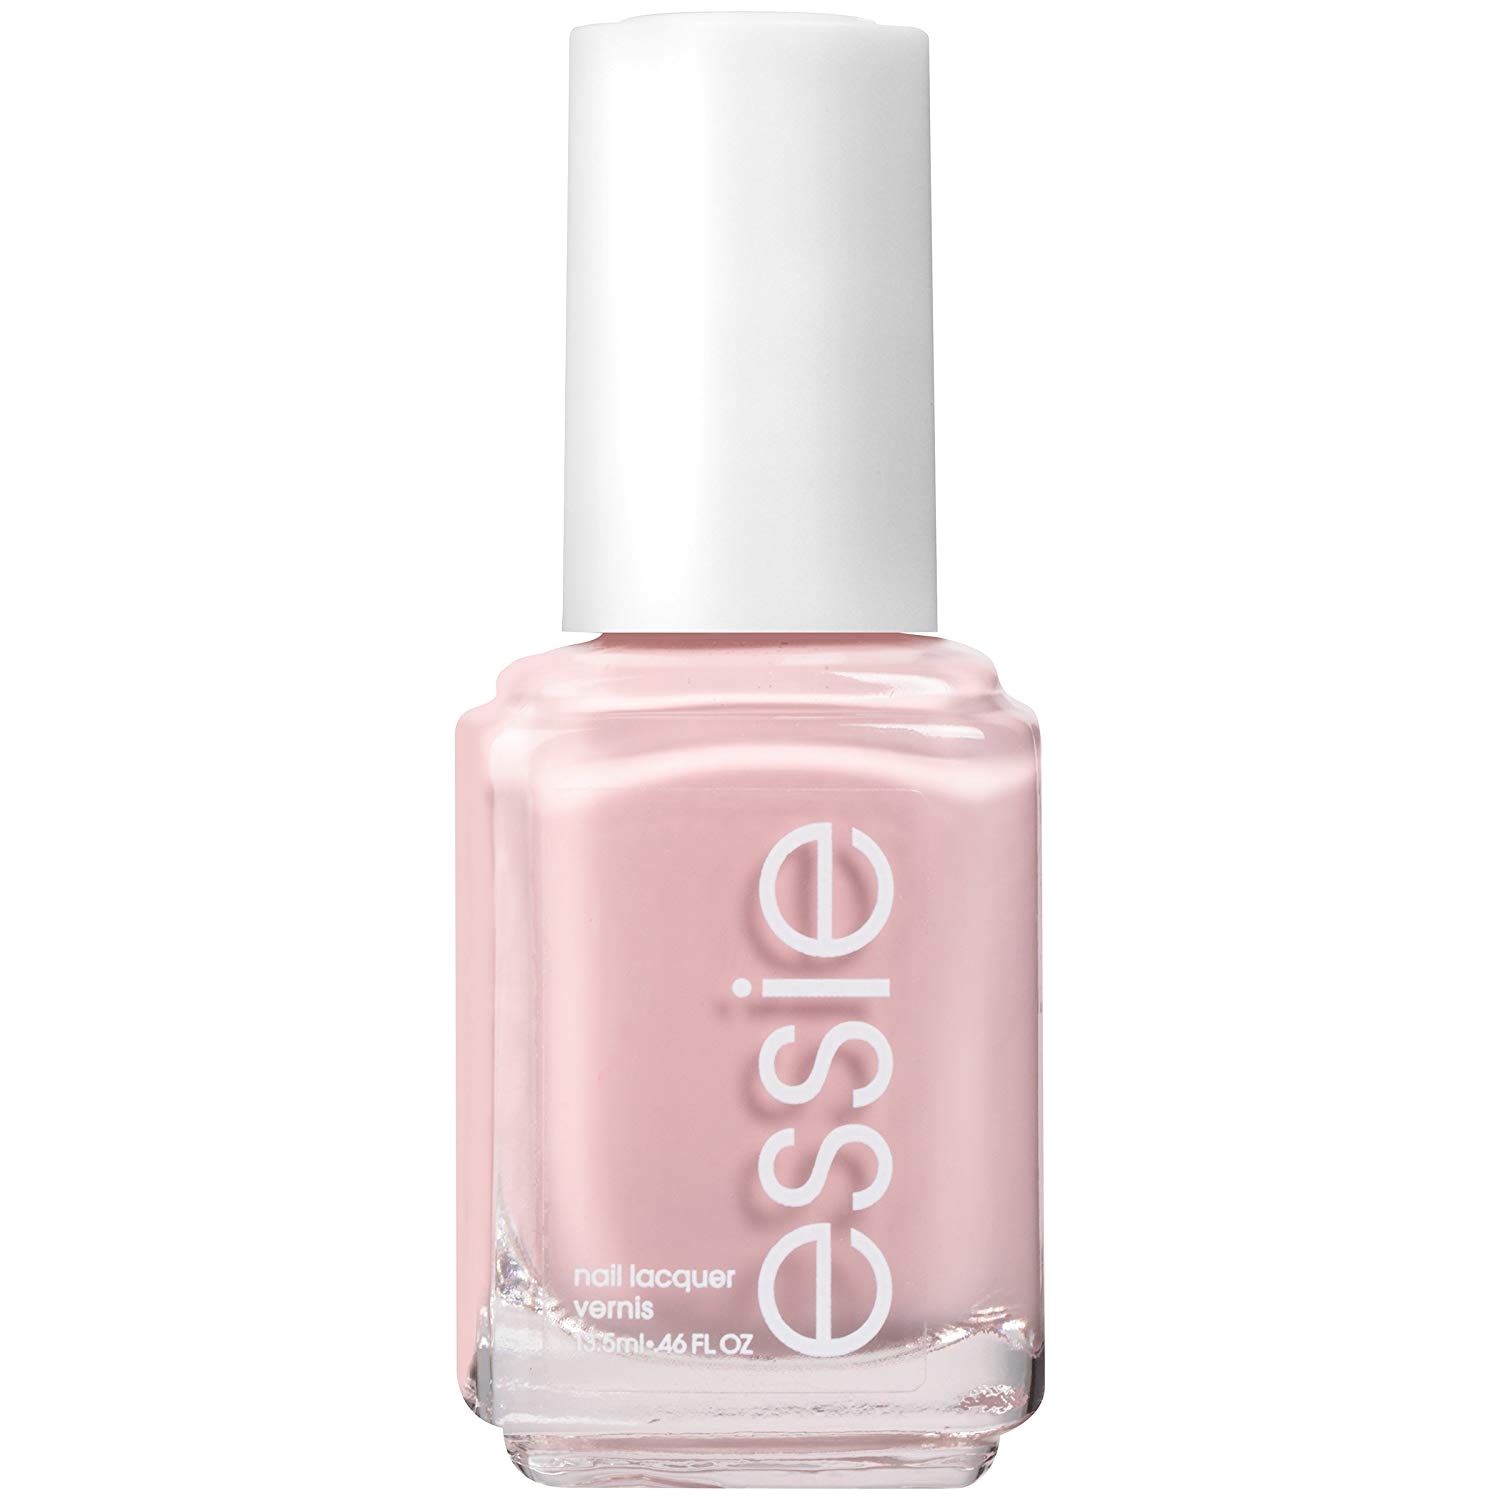 amazon com essie nail polish go go geisha light pink nail polish 0 46 fl oz beauty